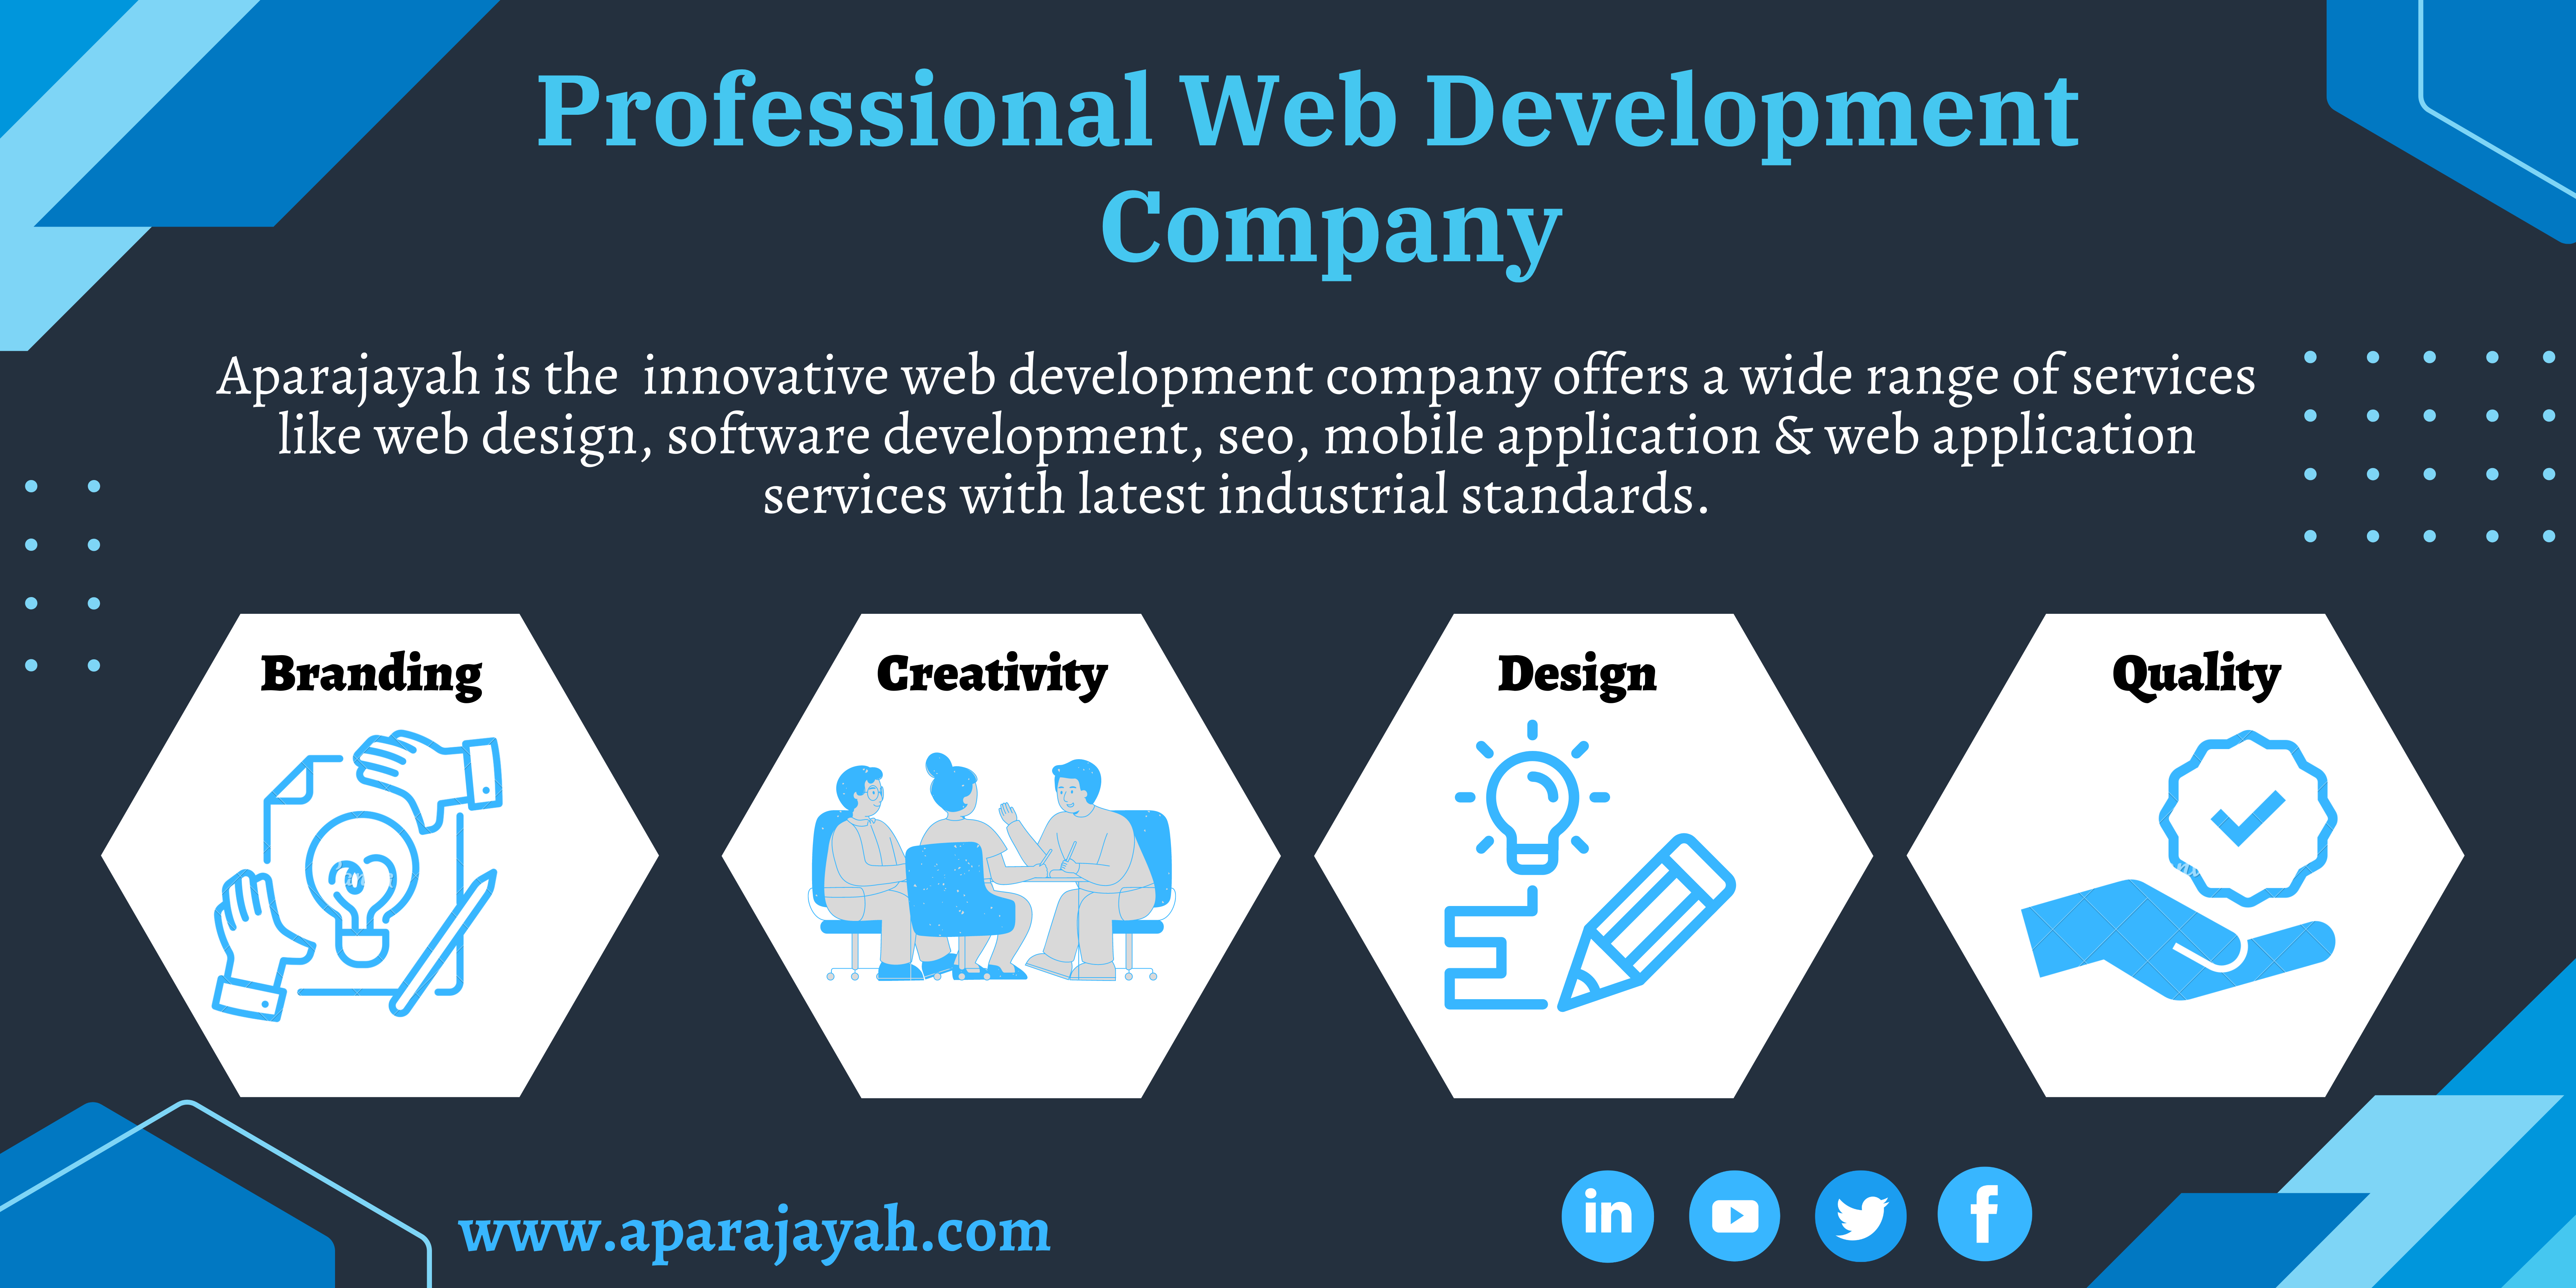 Web Development Company - Aparajayah|Property Management|Professional Services